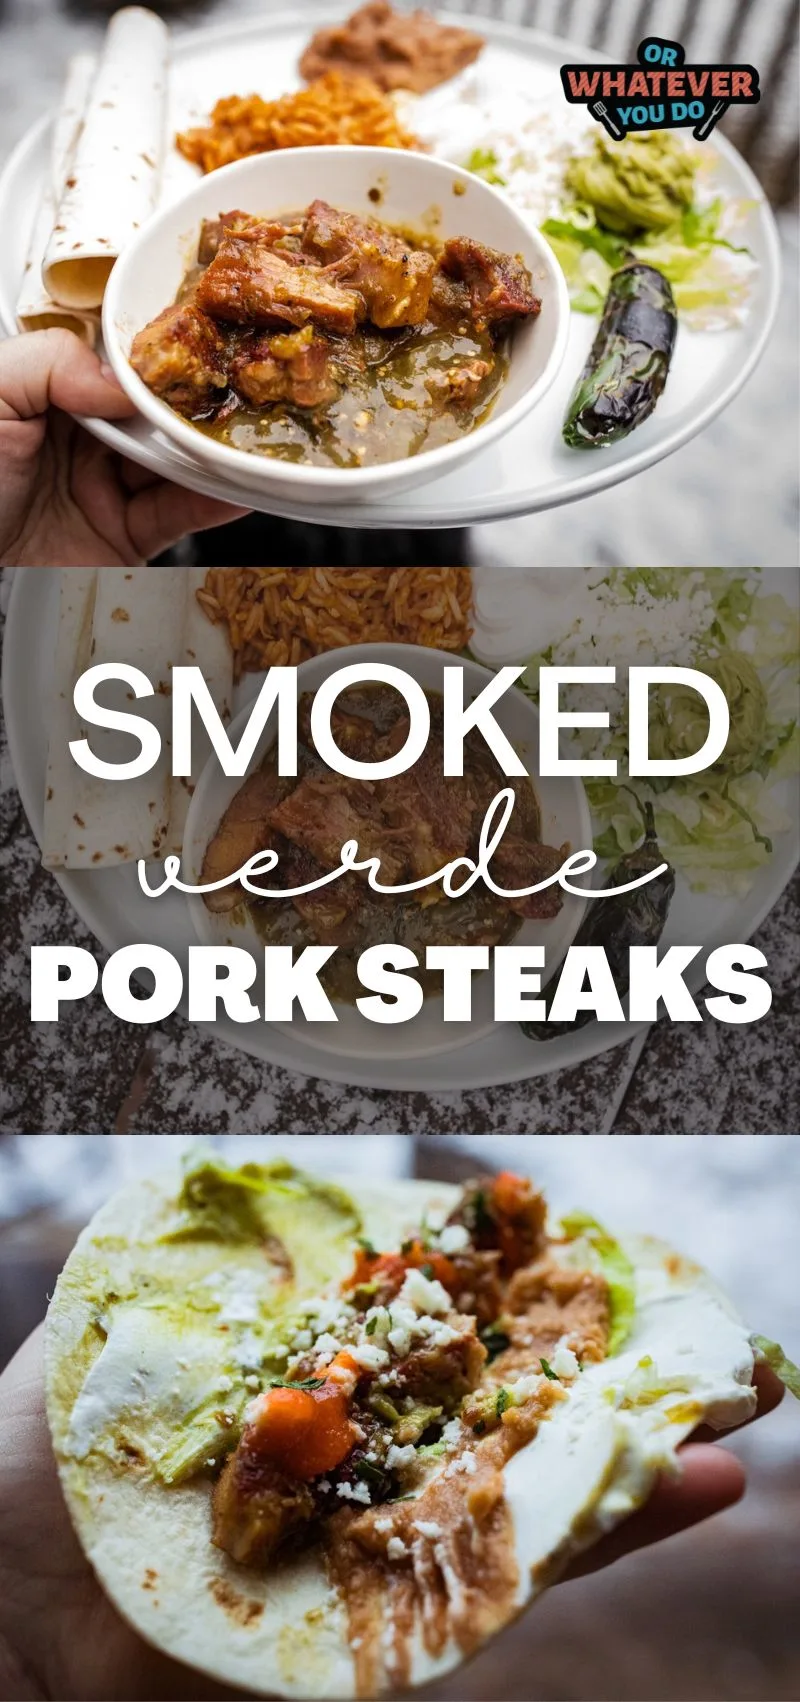 Smoked Verde Pork Steaks